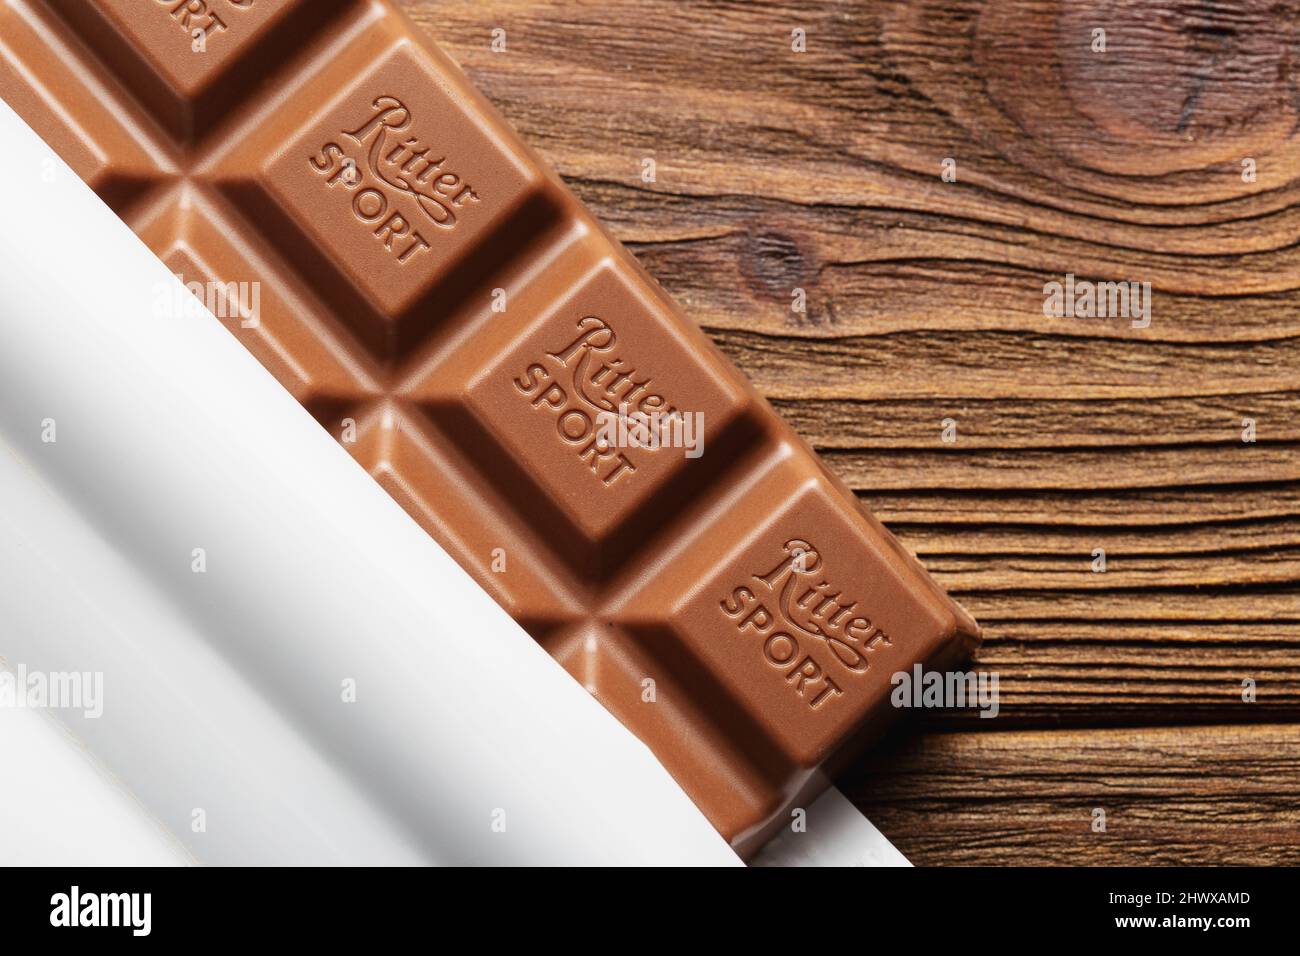 Ternopil, Ukraine - June 17, 2021: Ritter Sport milk chocolate bar close up macro on wooden background Stock Photo